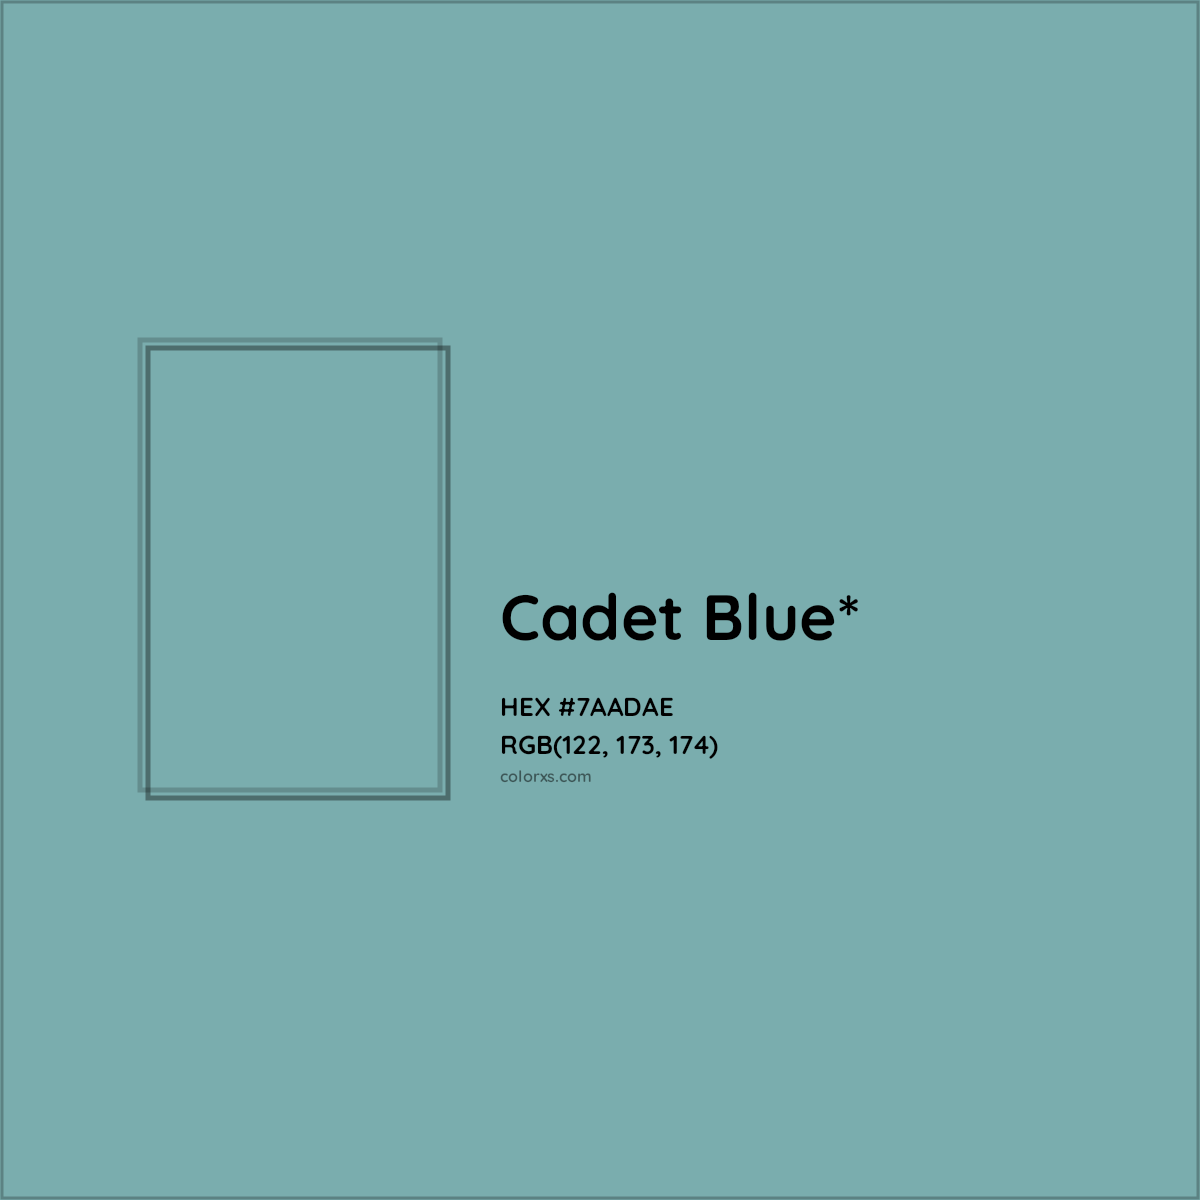 HEX #7AADAE Color Name, Color Code, Palettes, Similar Paints, Images